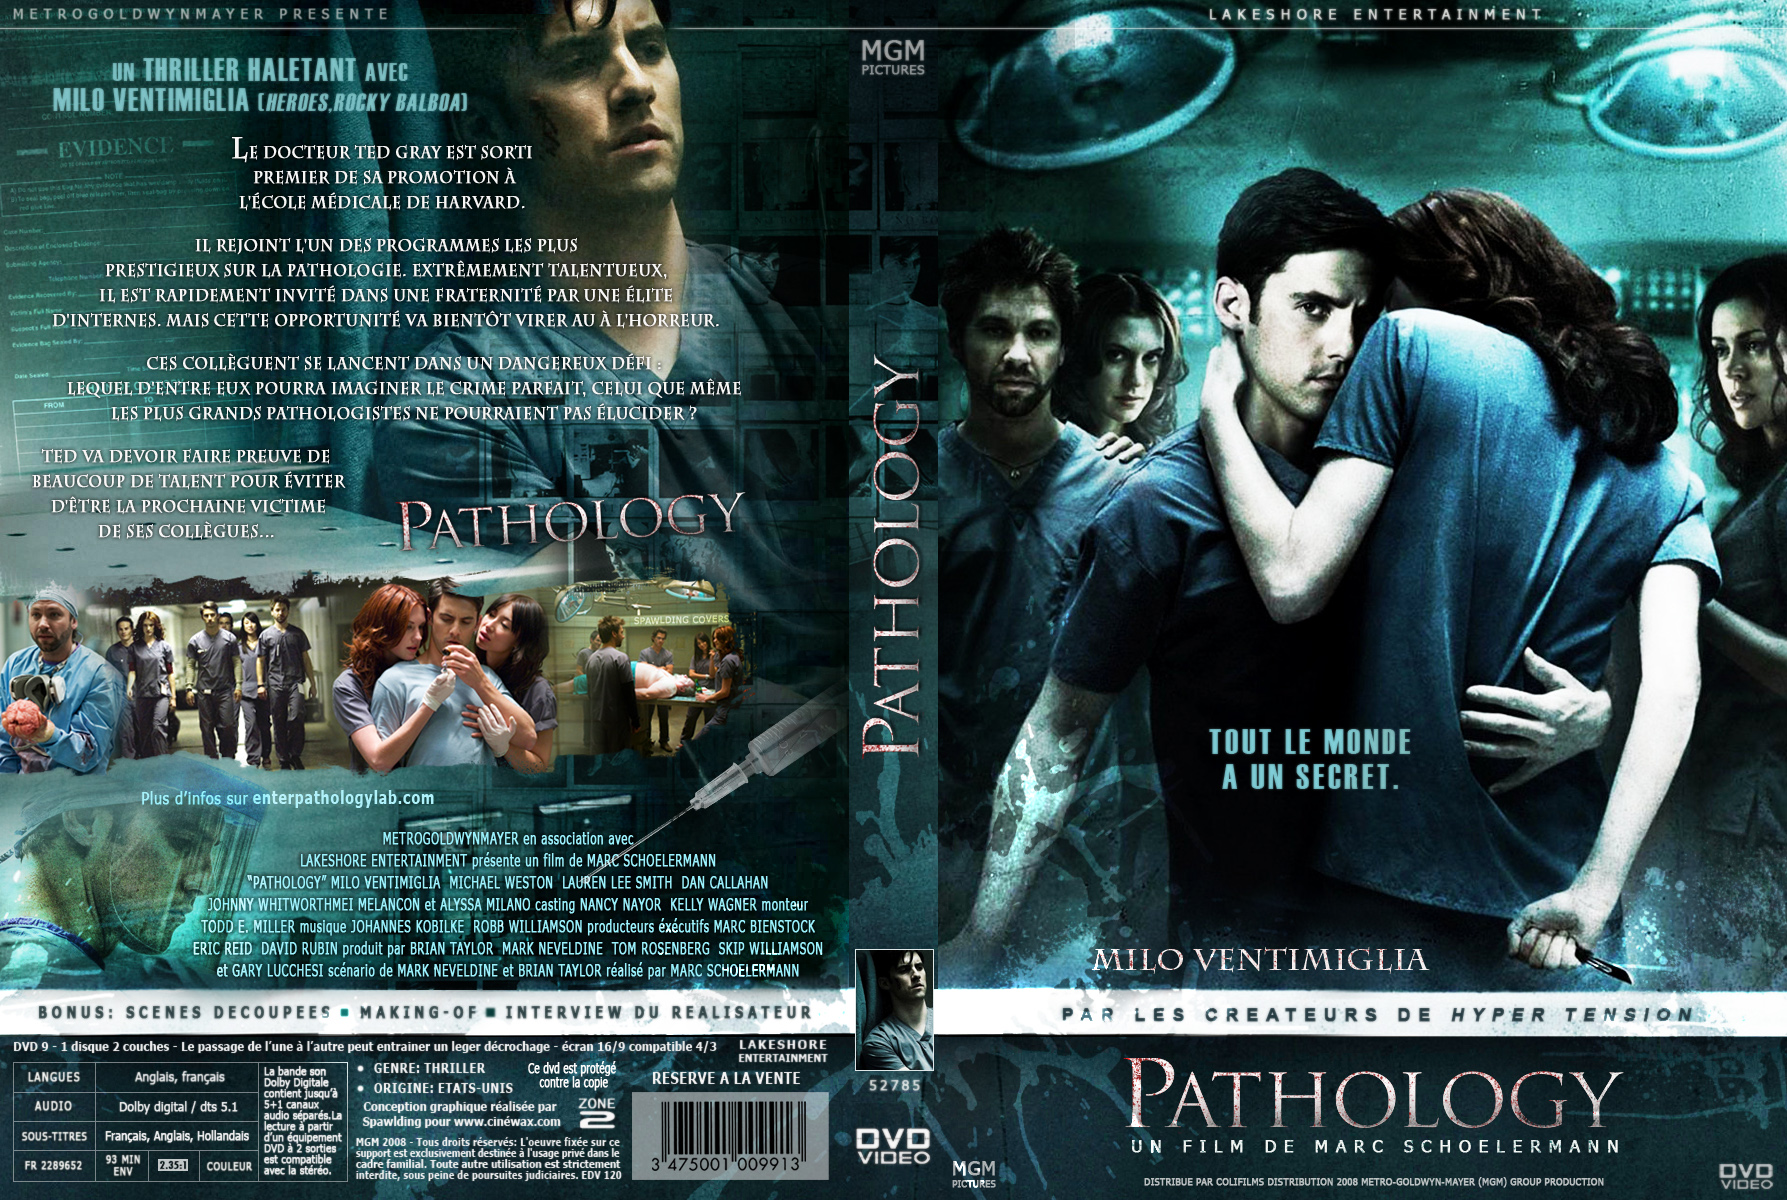 Jaquette DVD Pathology custom